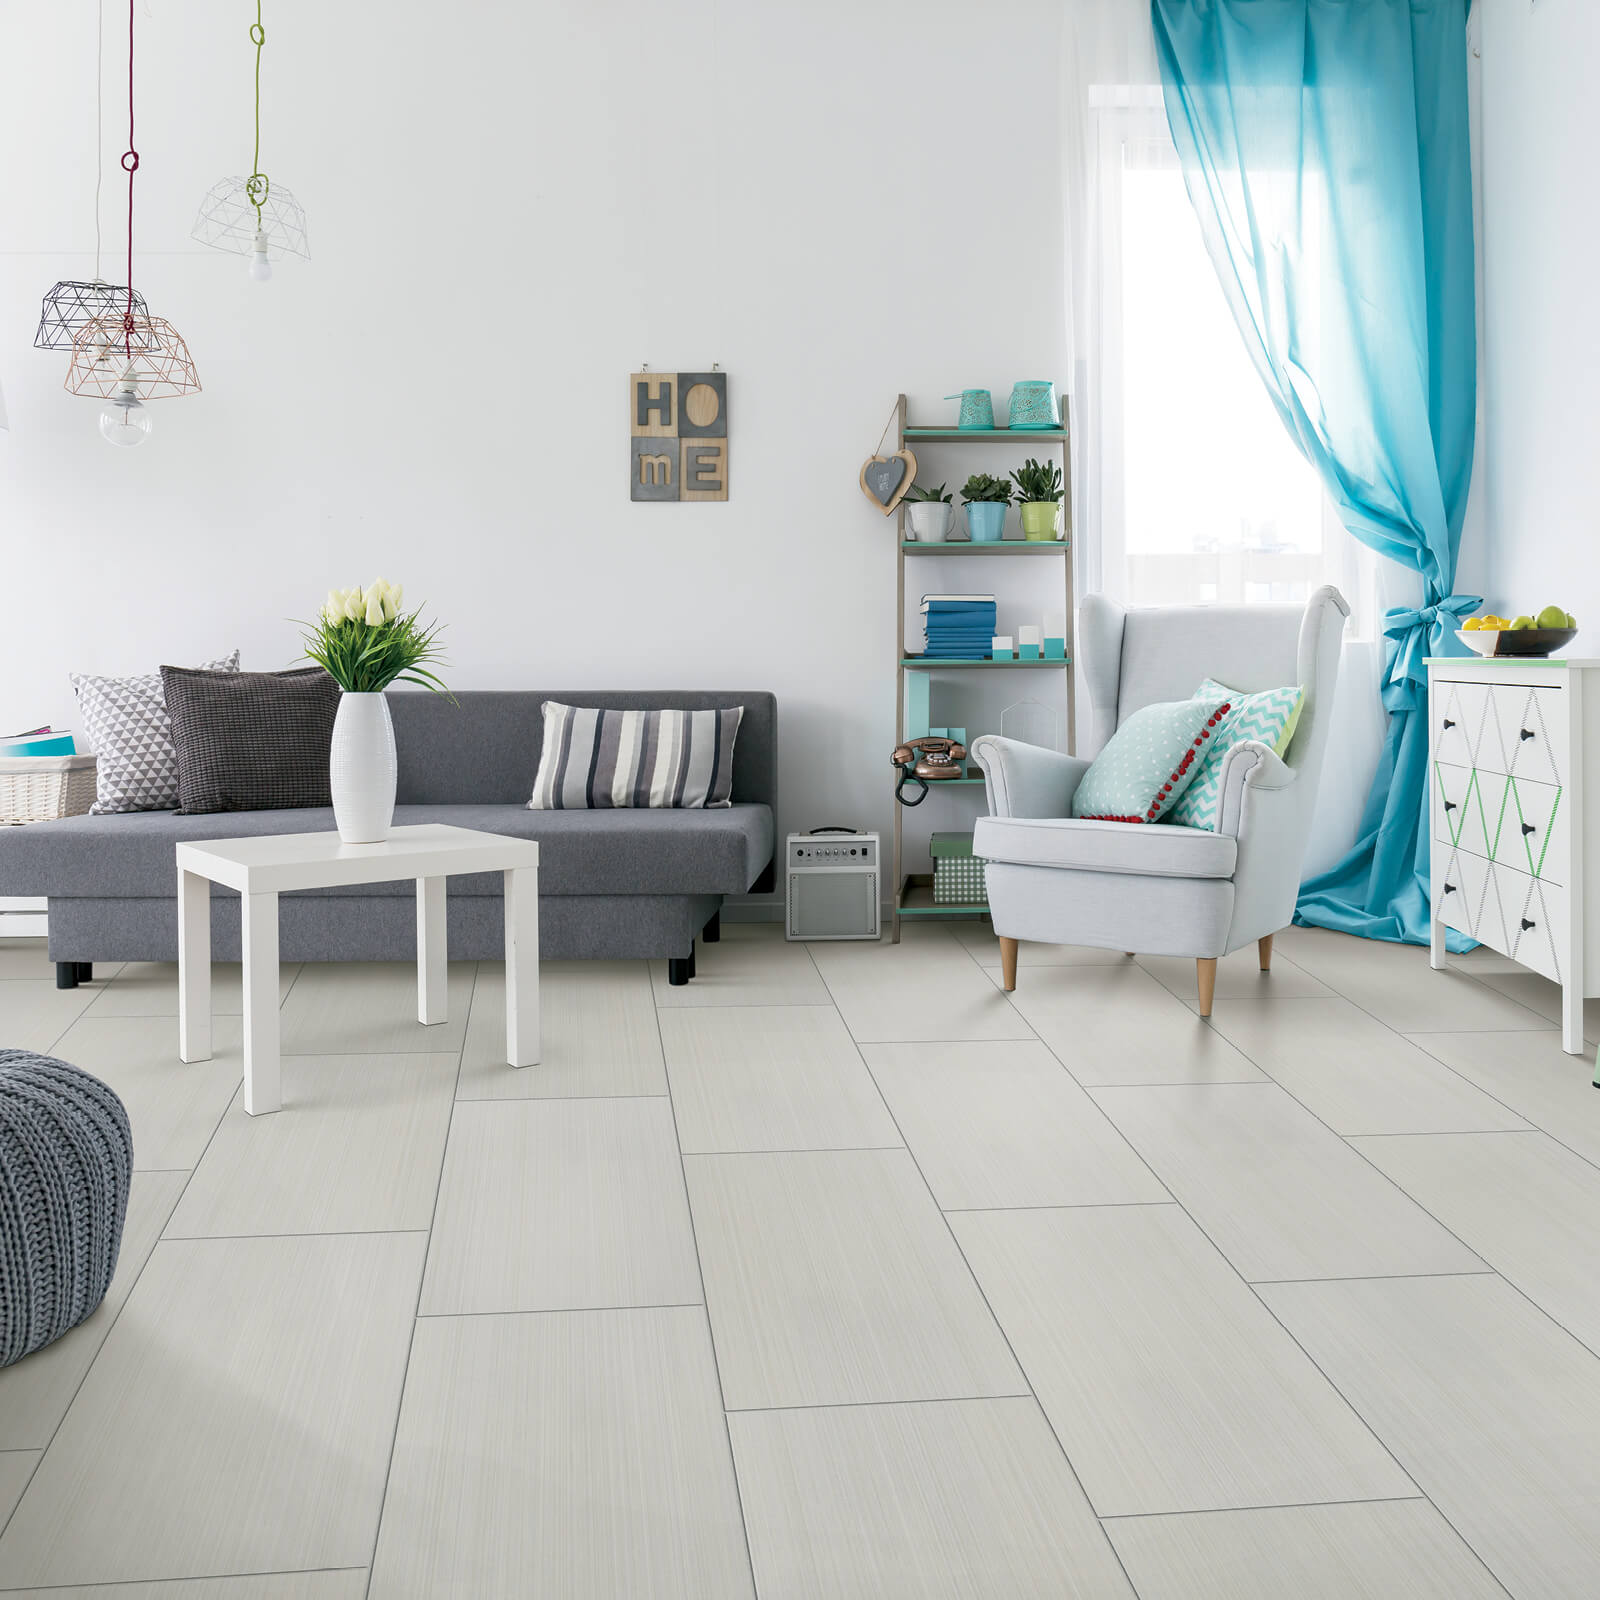 Tile flooring for living room | CarpetsPlus COLORTILE of Hutchinson